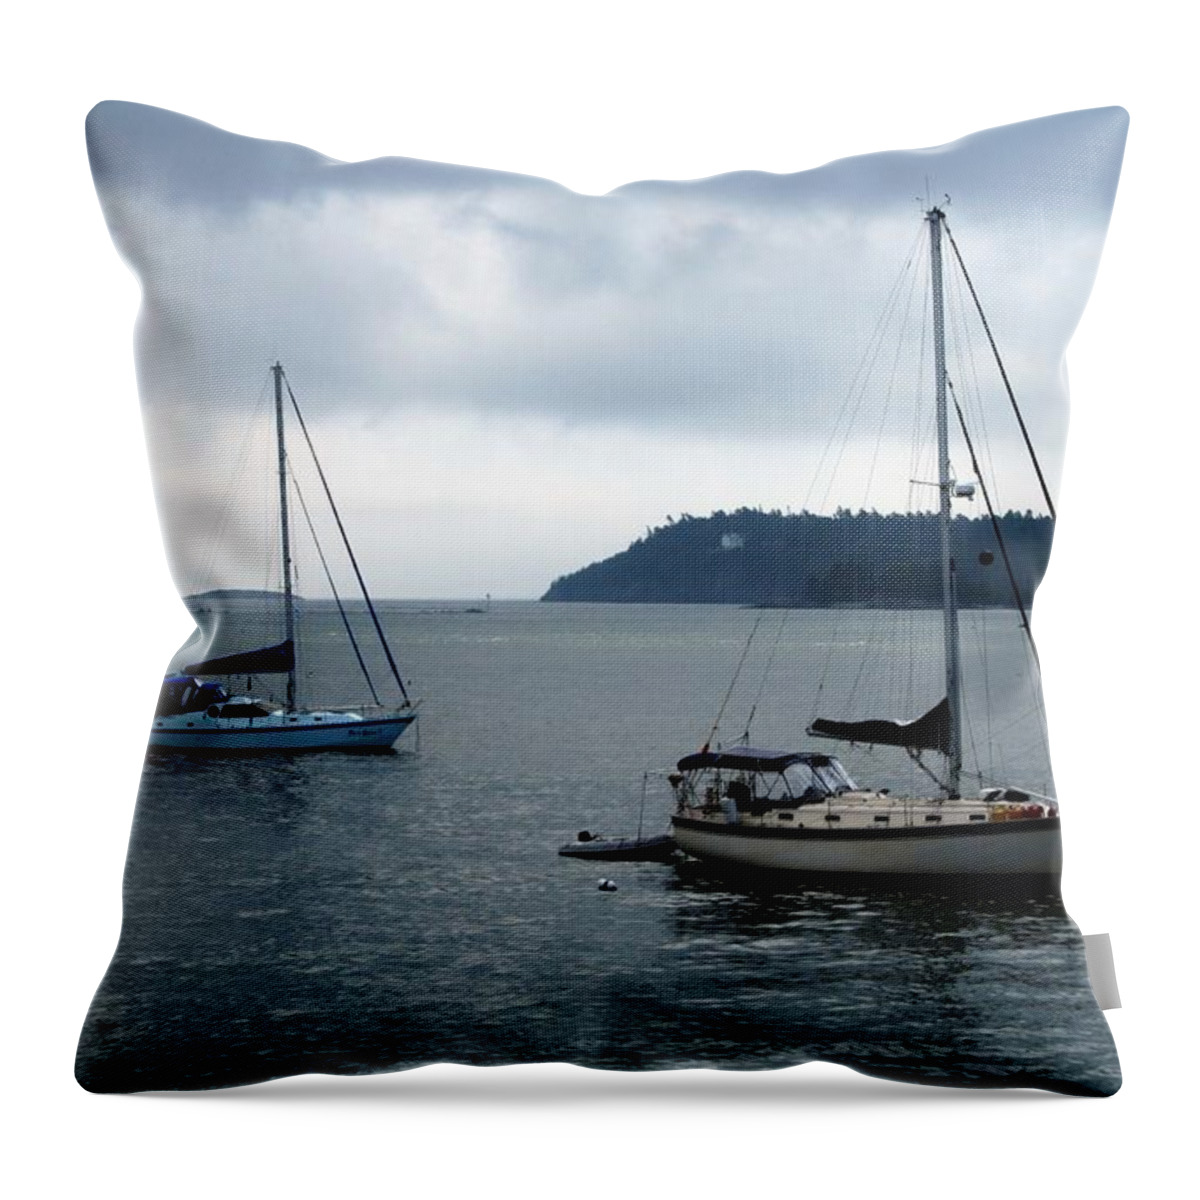 Sailboats Throw Pillow featuring the photograph Sailboats in Bar Harbor by Linda Sannuti